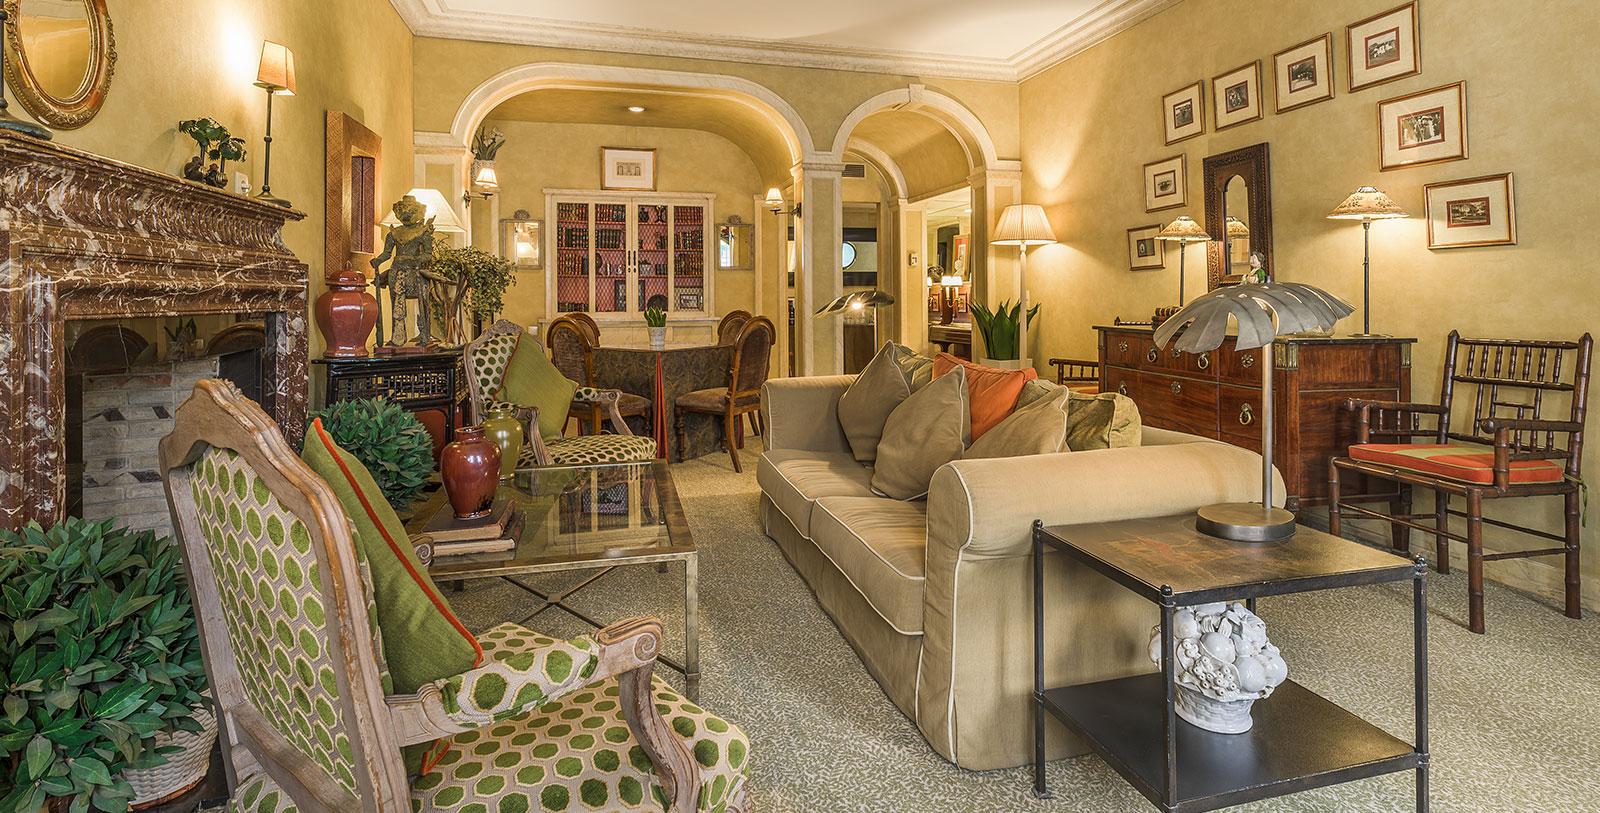 Discover the Belle Époque interiors inspired by famous Portuguese writer Eҁa de Queiroz.